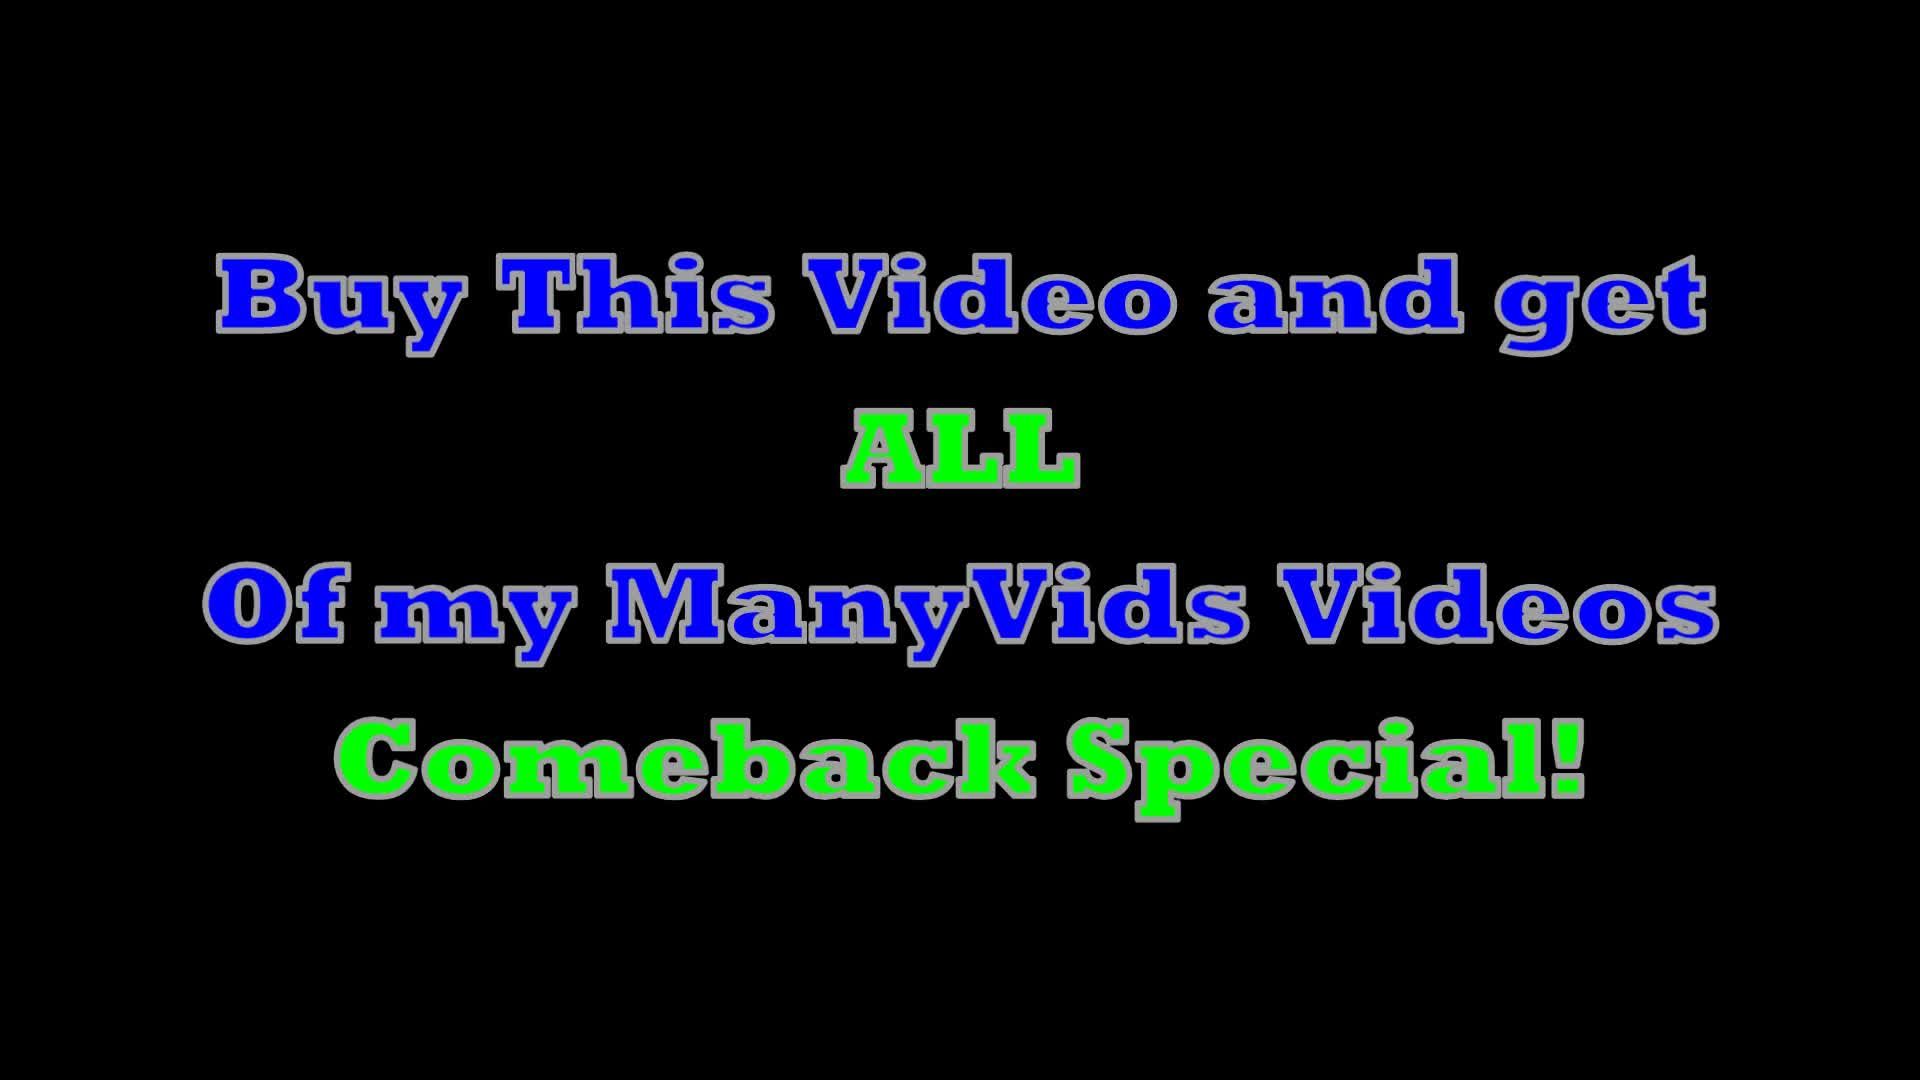 COMEBACK SPECIAL $180 Value ALL VIDEOS